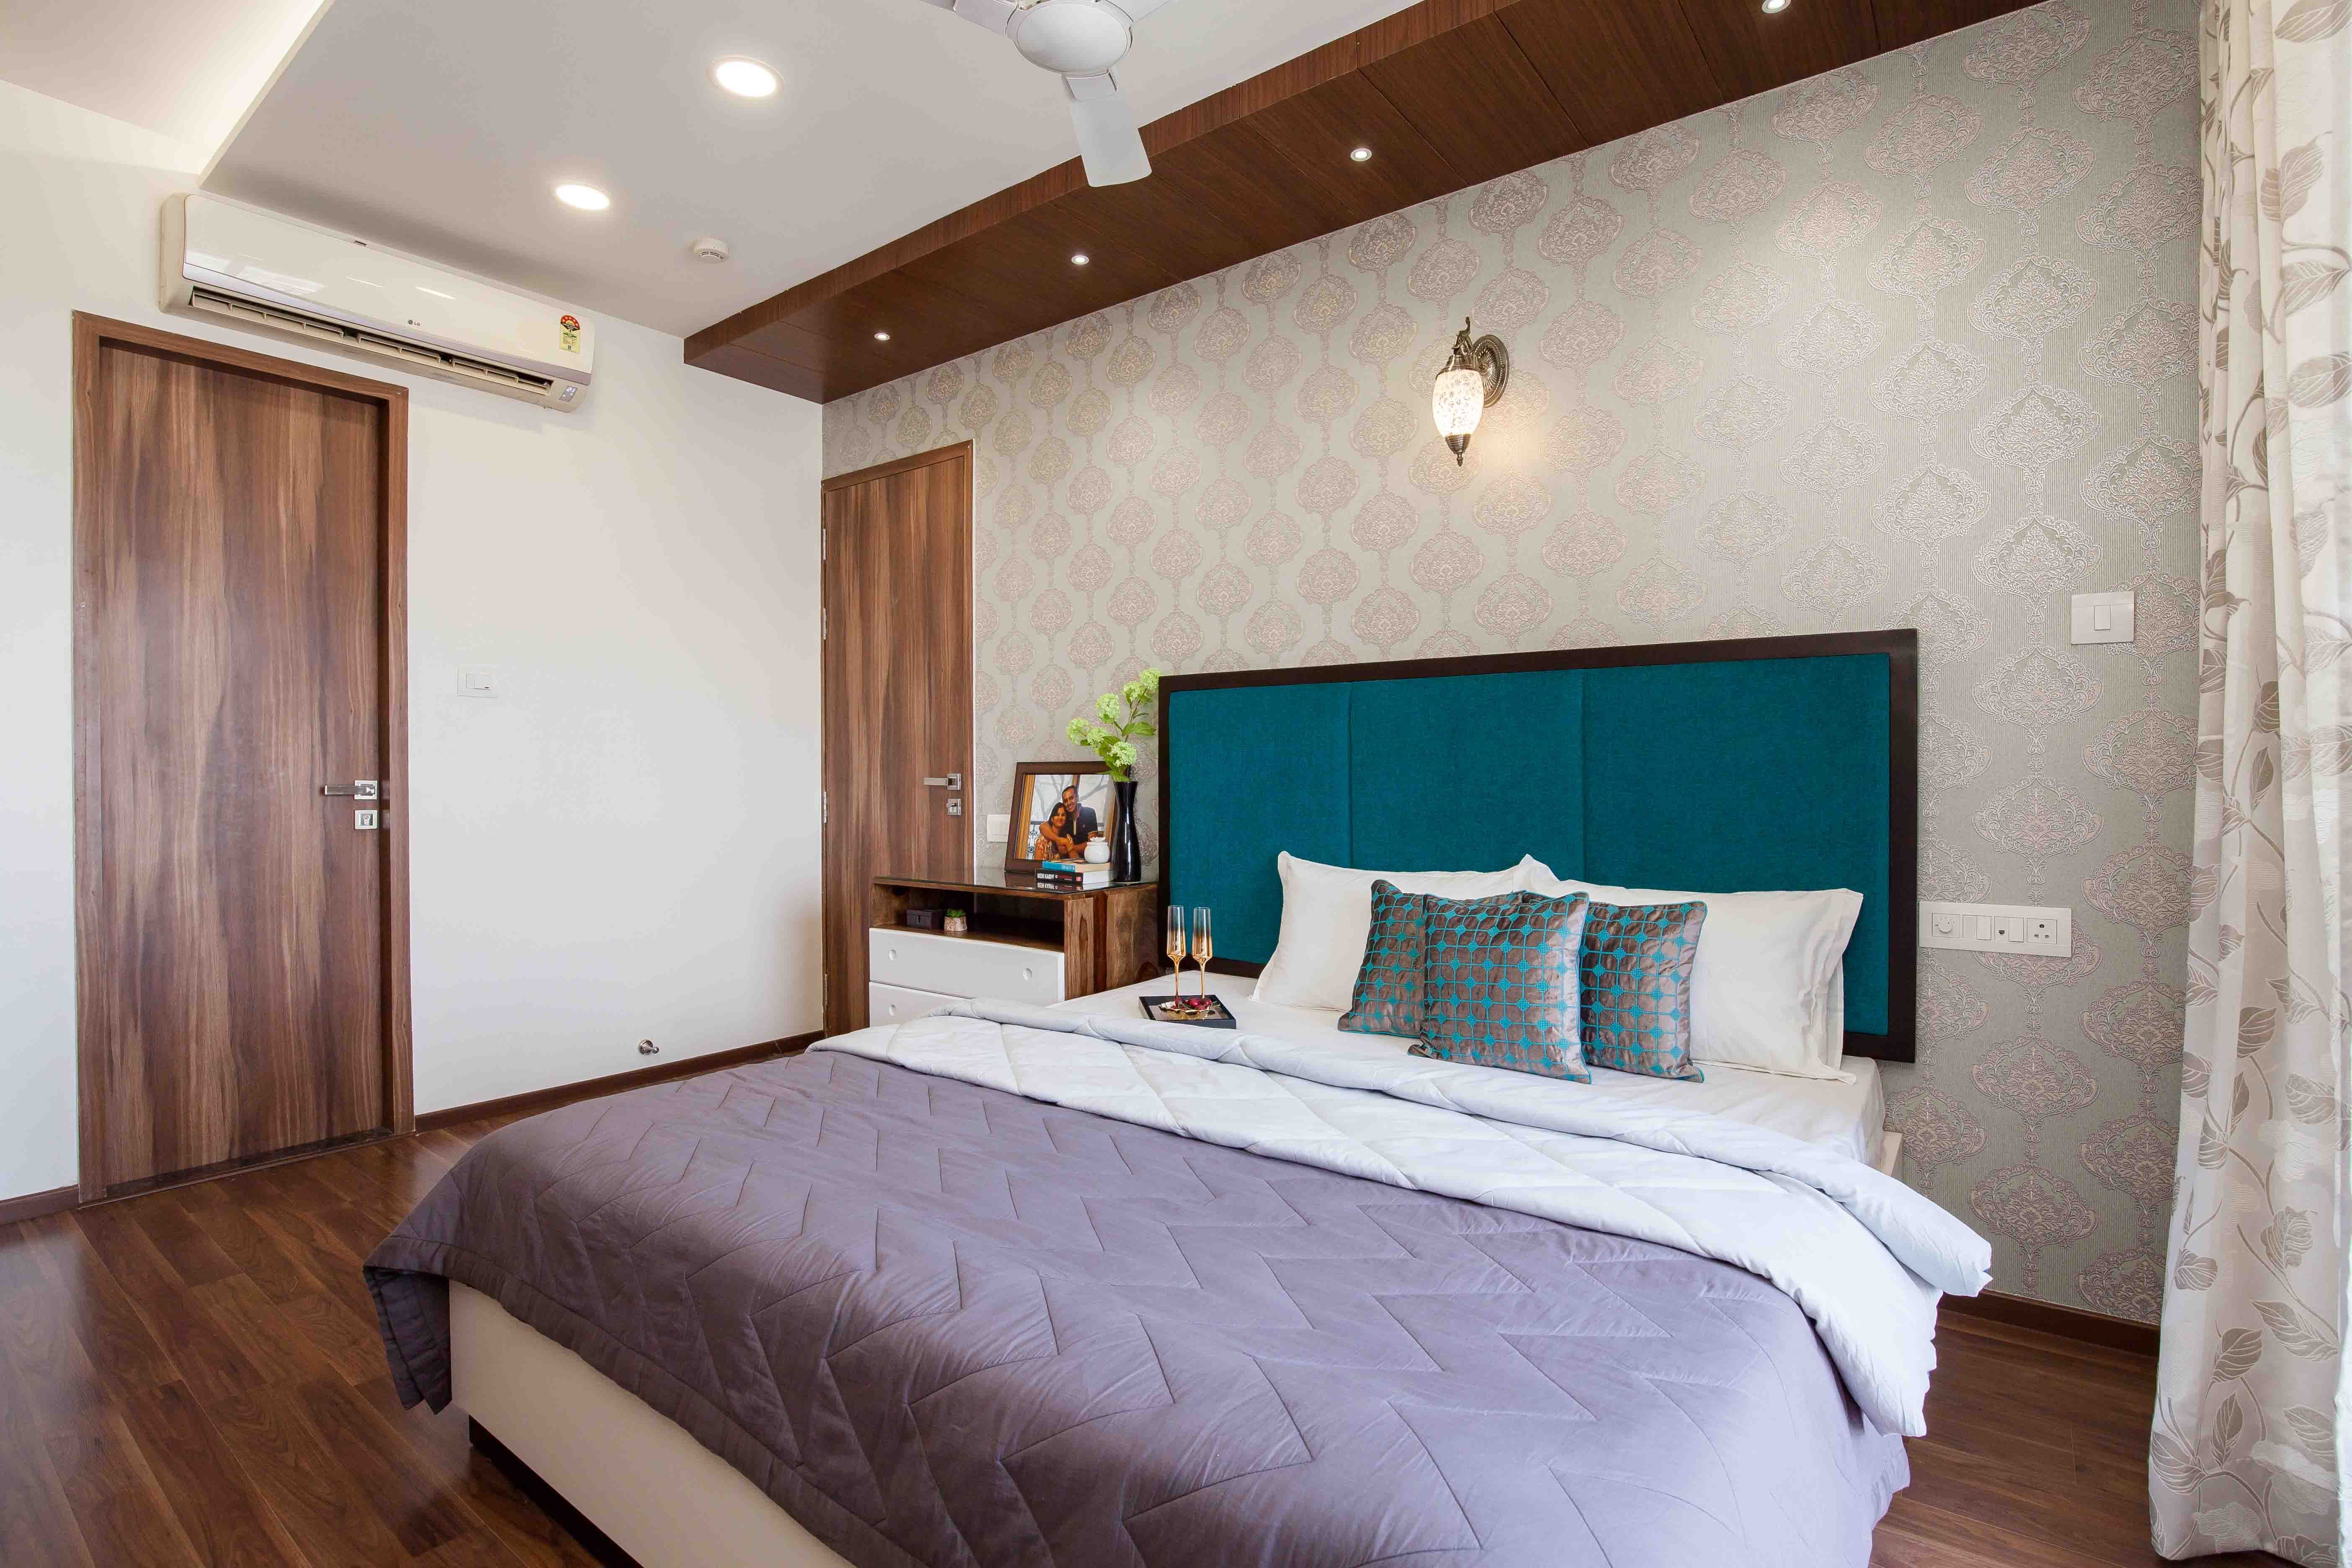 Classic Master Bedroom Design With Beige Damask Wallpaper